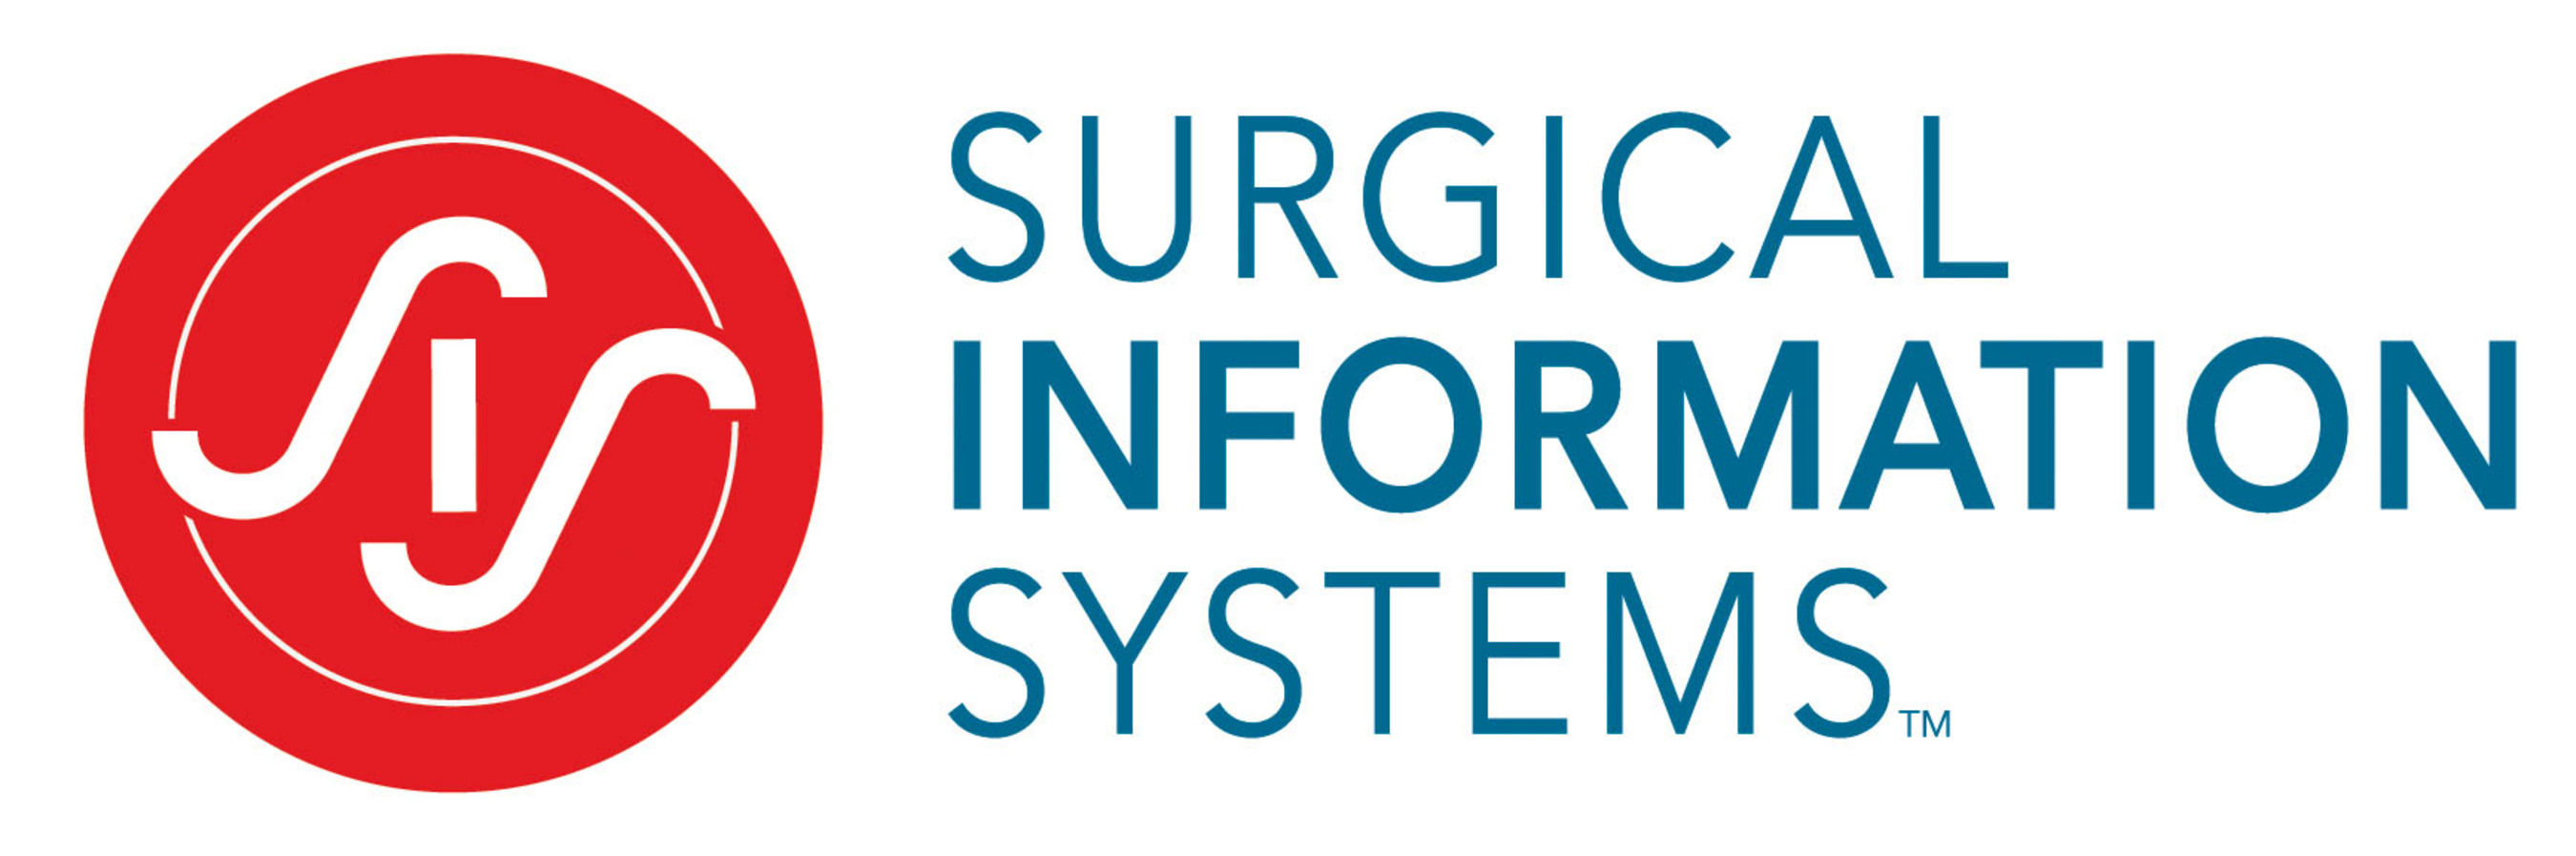 Surgical Information Systems LOGO. (PRNewsFoto/Surgical Information Systems) (PRNewsFoto/)